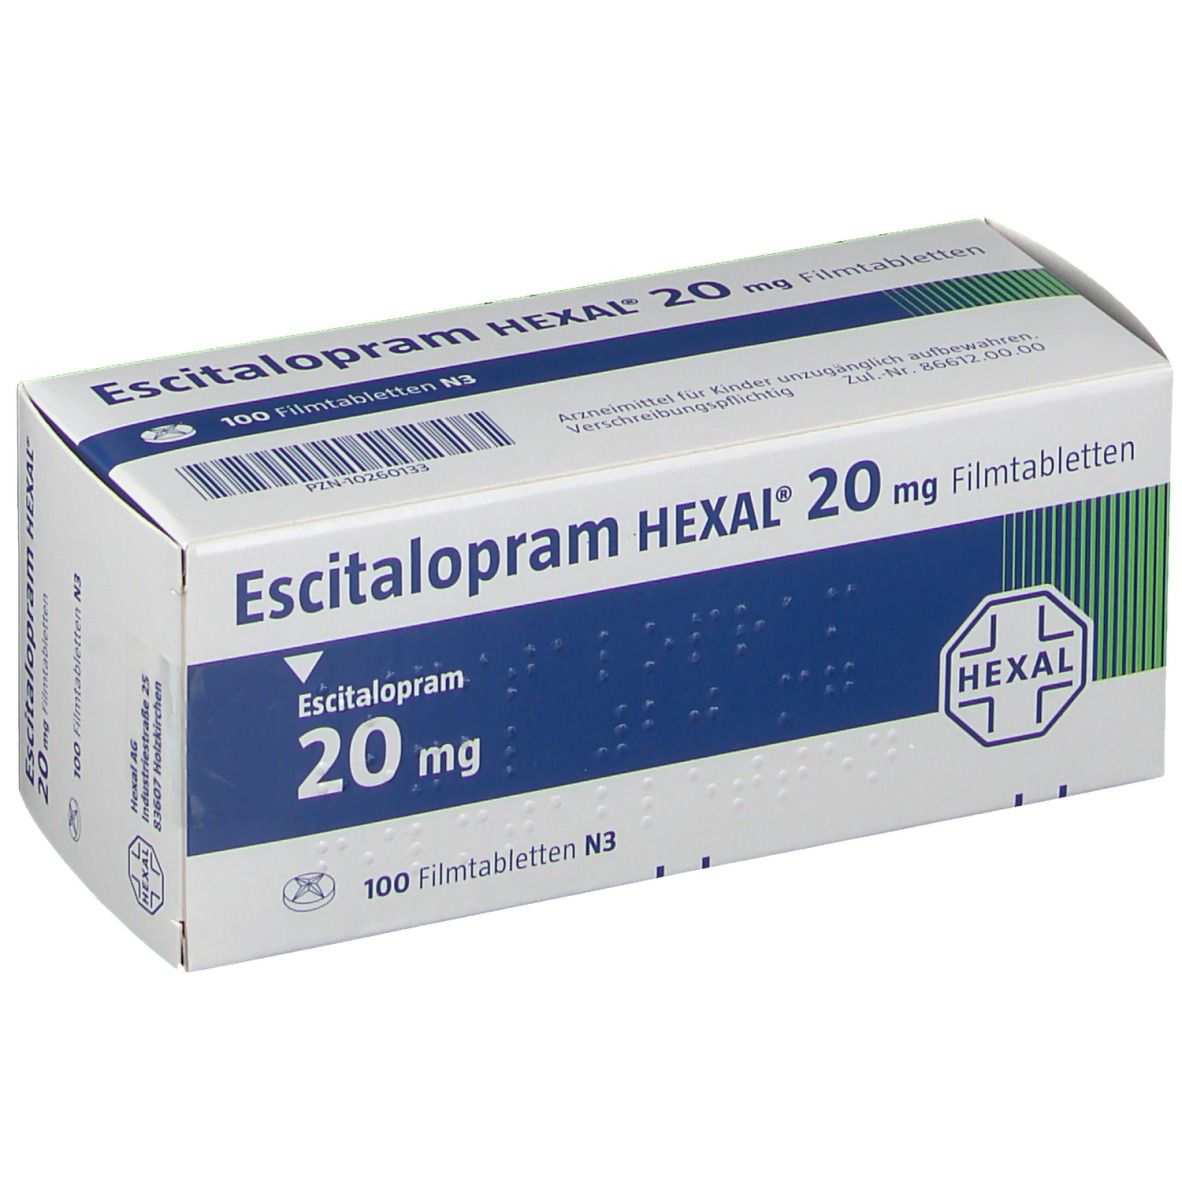 Escitalopram HEXAL® 20 mg